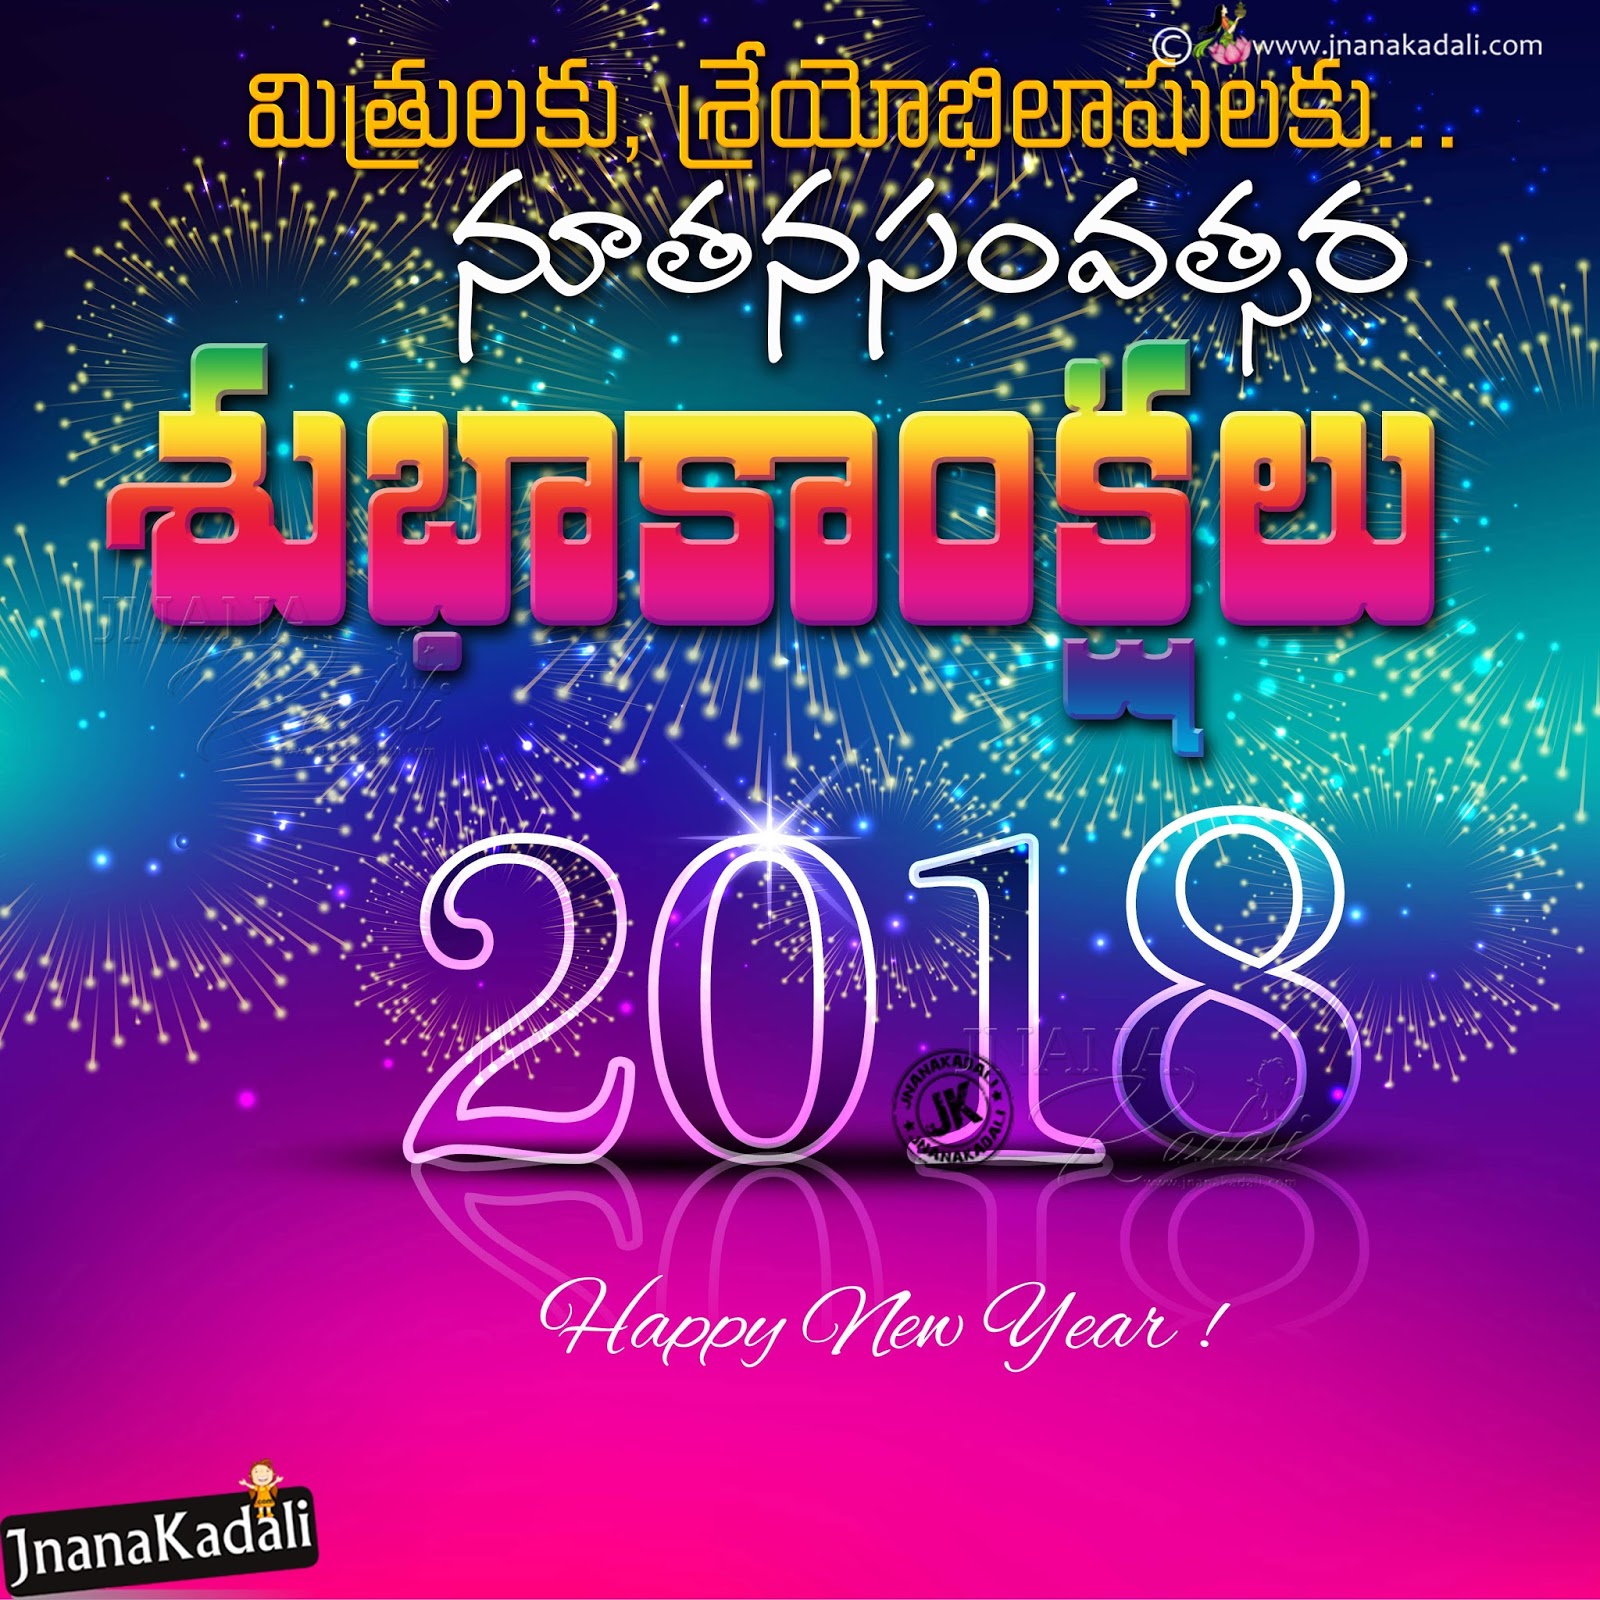 famous-telugu-new-year-greetings-in-telugu-2018-latest-new-year